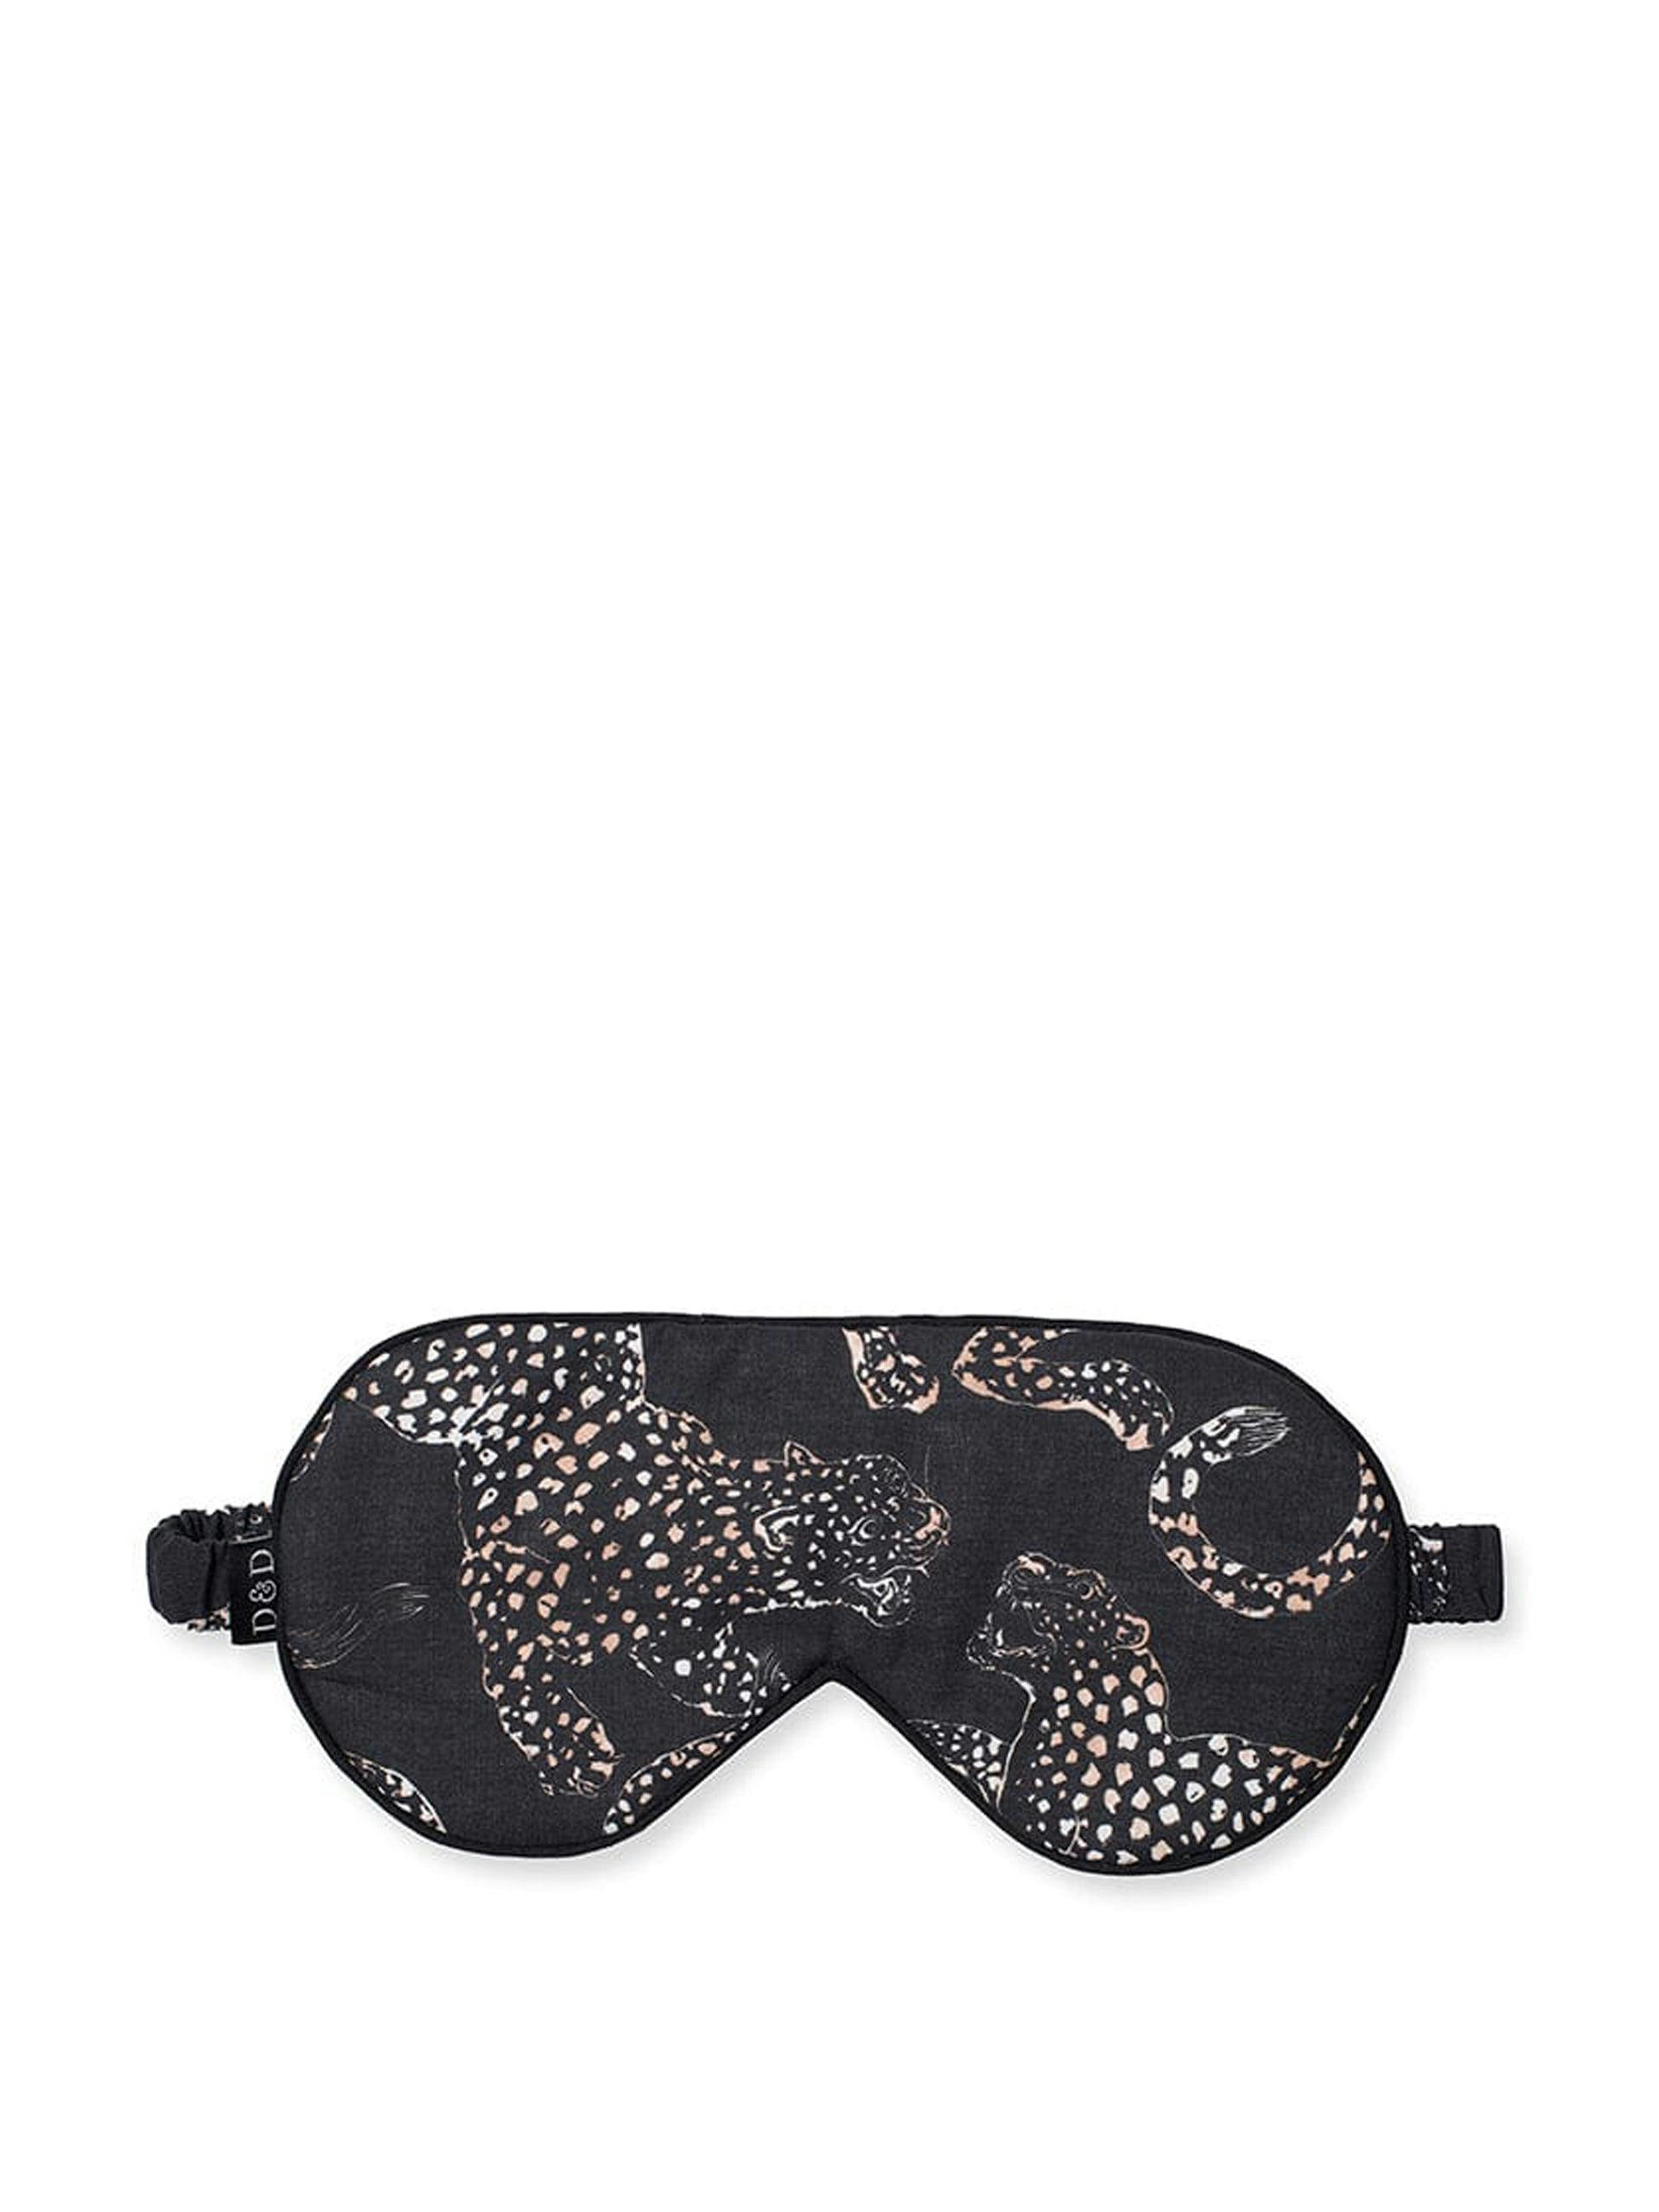 Cotton luxe eye mask in navy Jaguar print